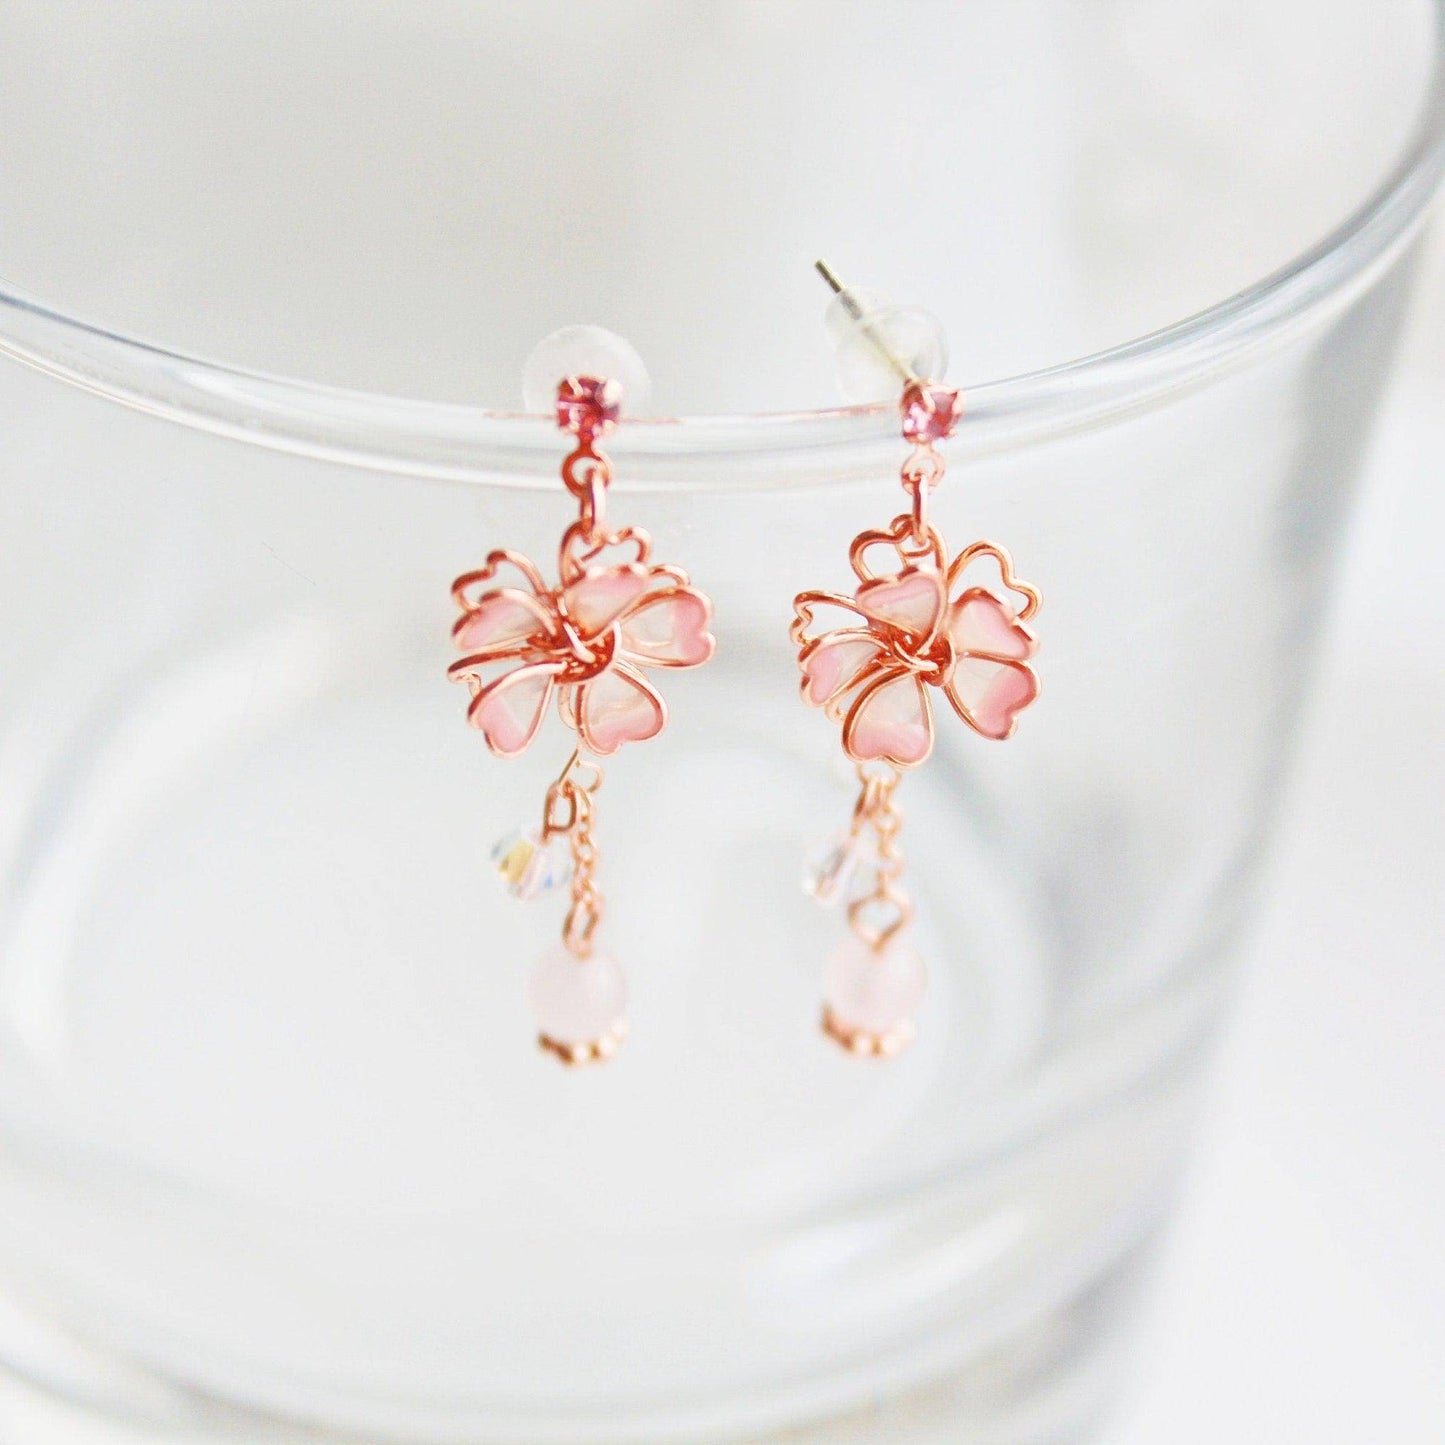 Sakura Flower Earrings - Pink Cherry Blossom with Crystal Drop Earrings-Ninaouity